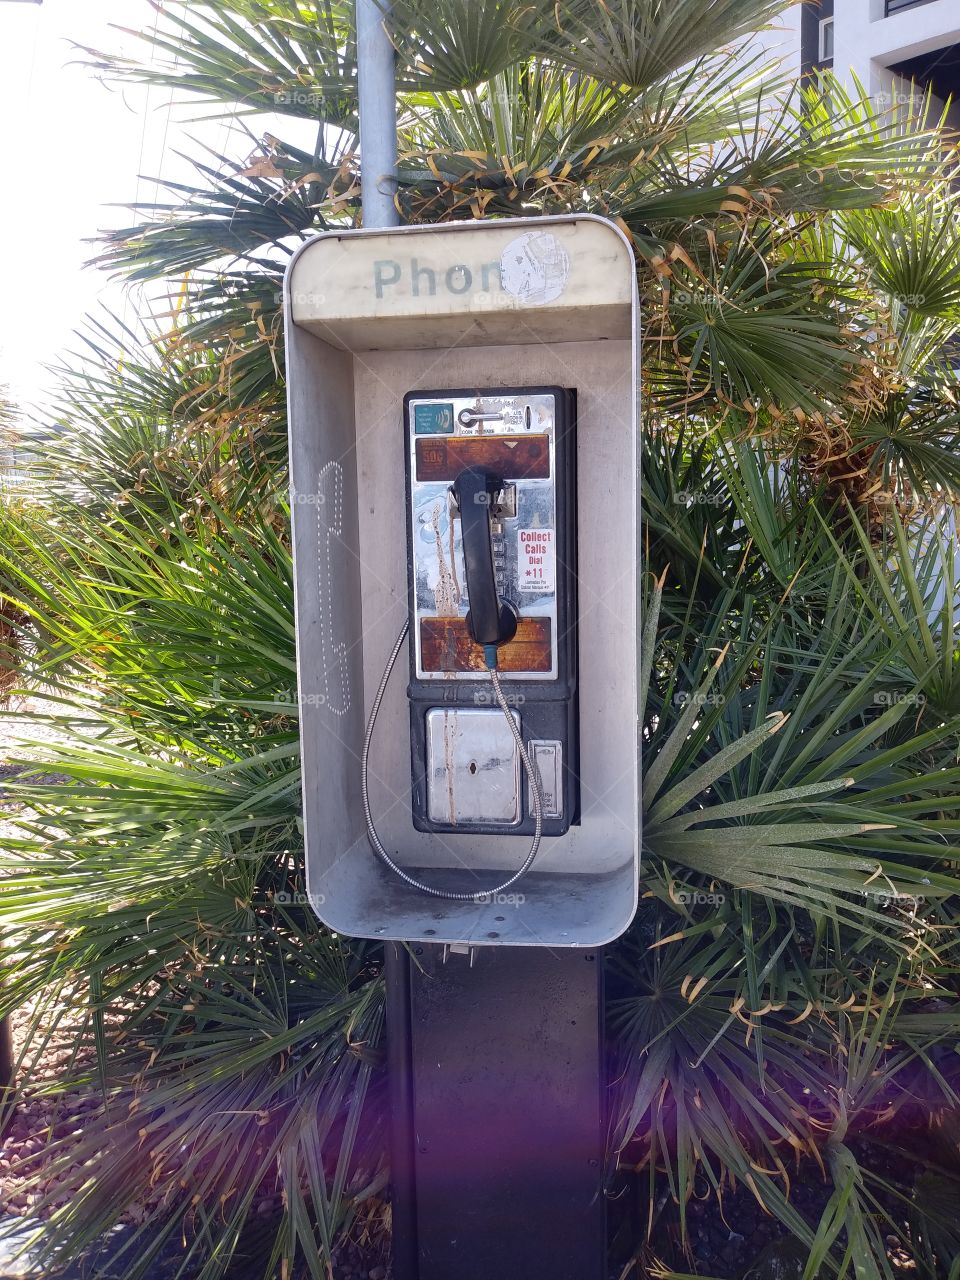 Rare pay phone sighting